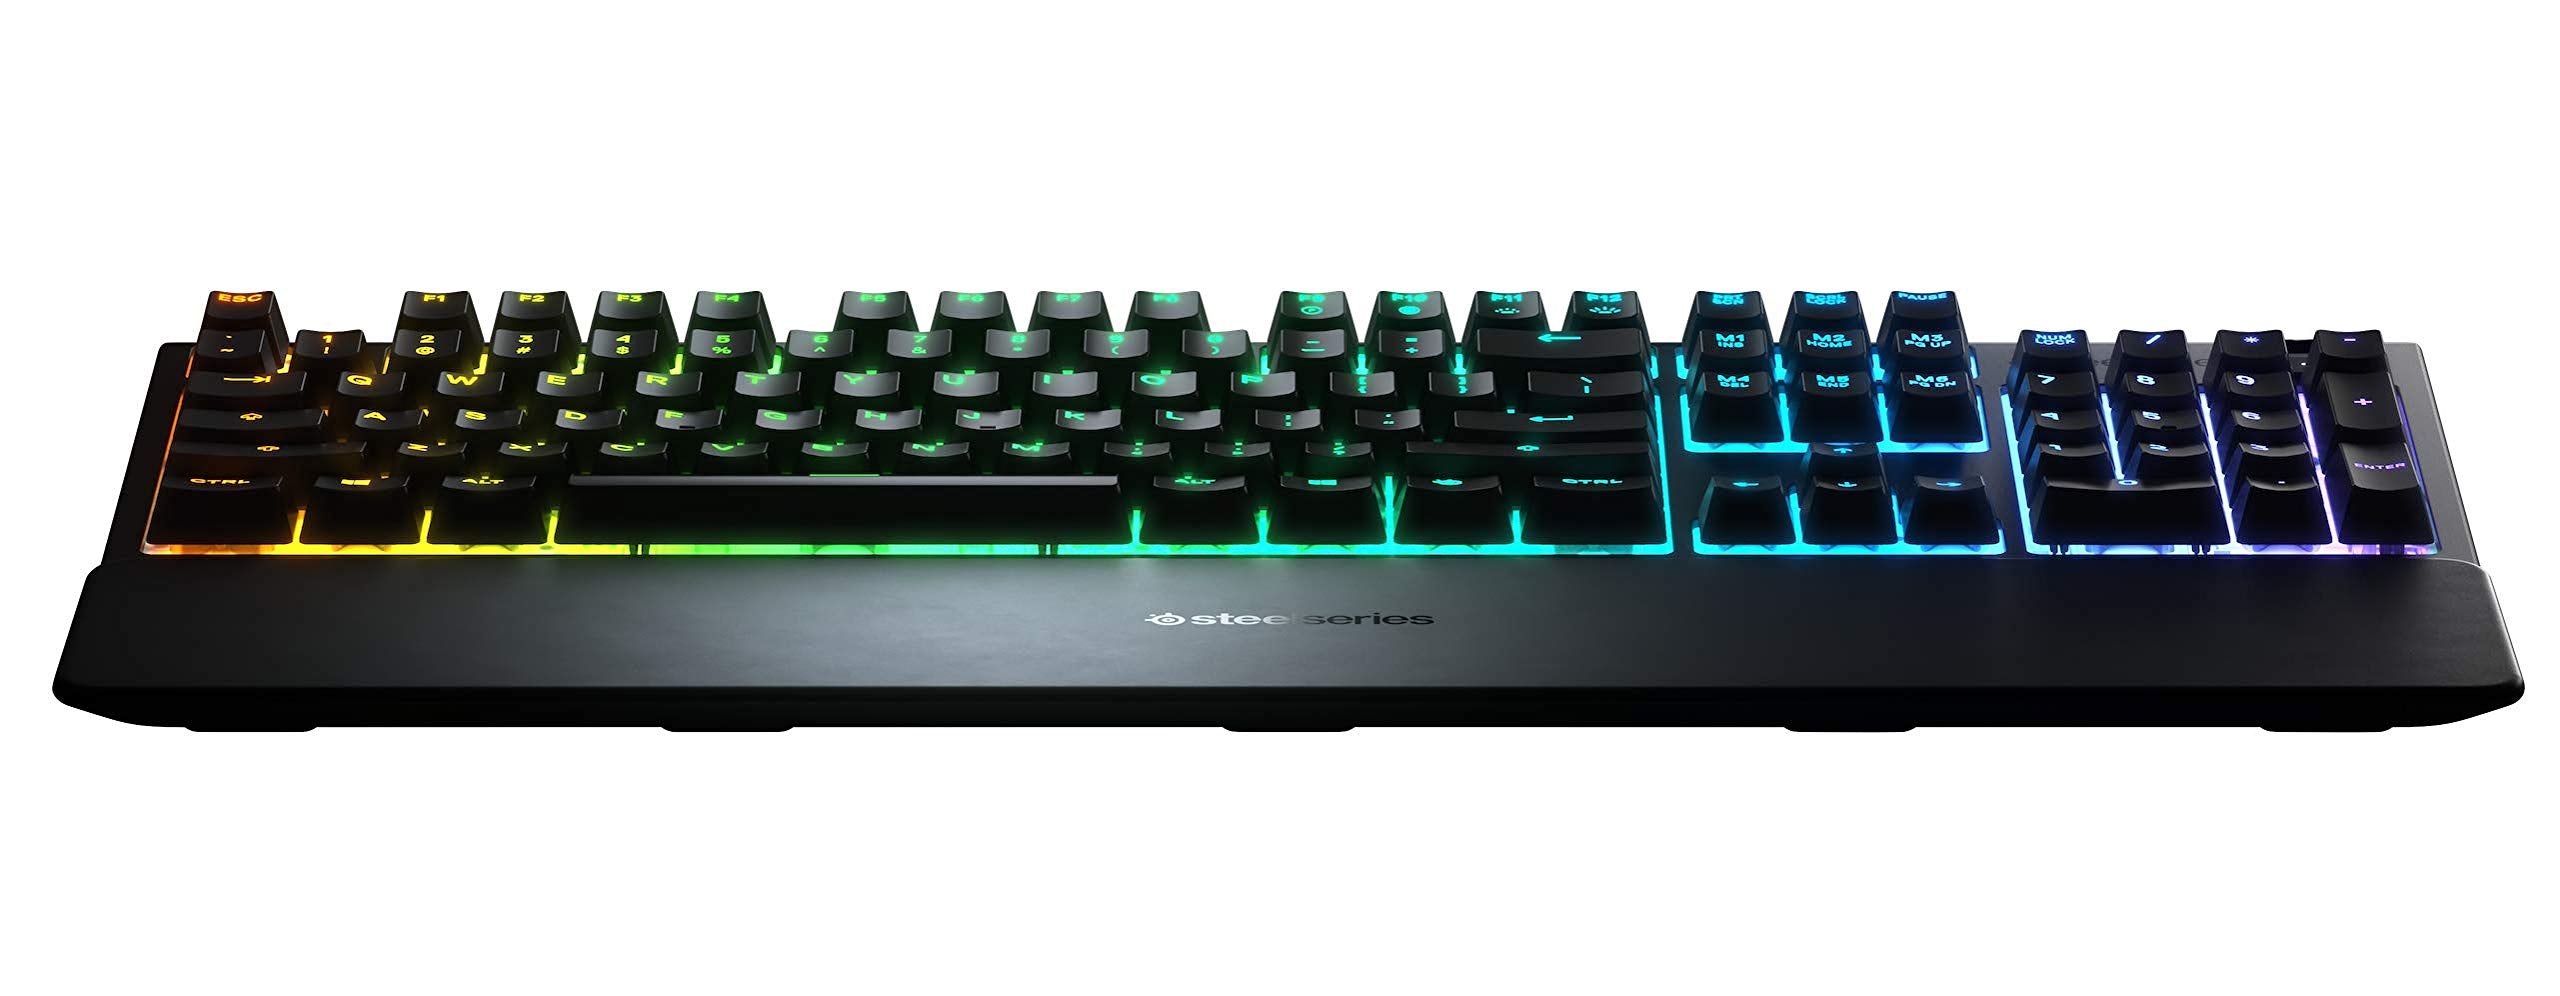 SteelSeries Apex 3 - RGB Gaming Keyboard - 10-Zone RGB Illumination - Premium Magnetic Wrist Rest - English Qwerty Layout PC, Standard